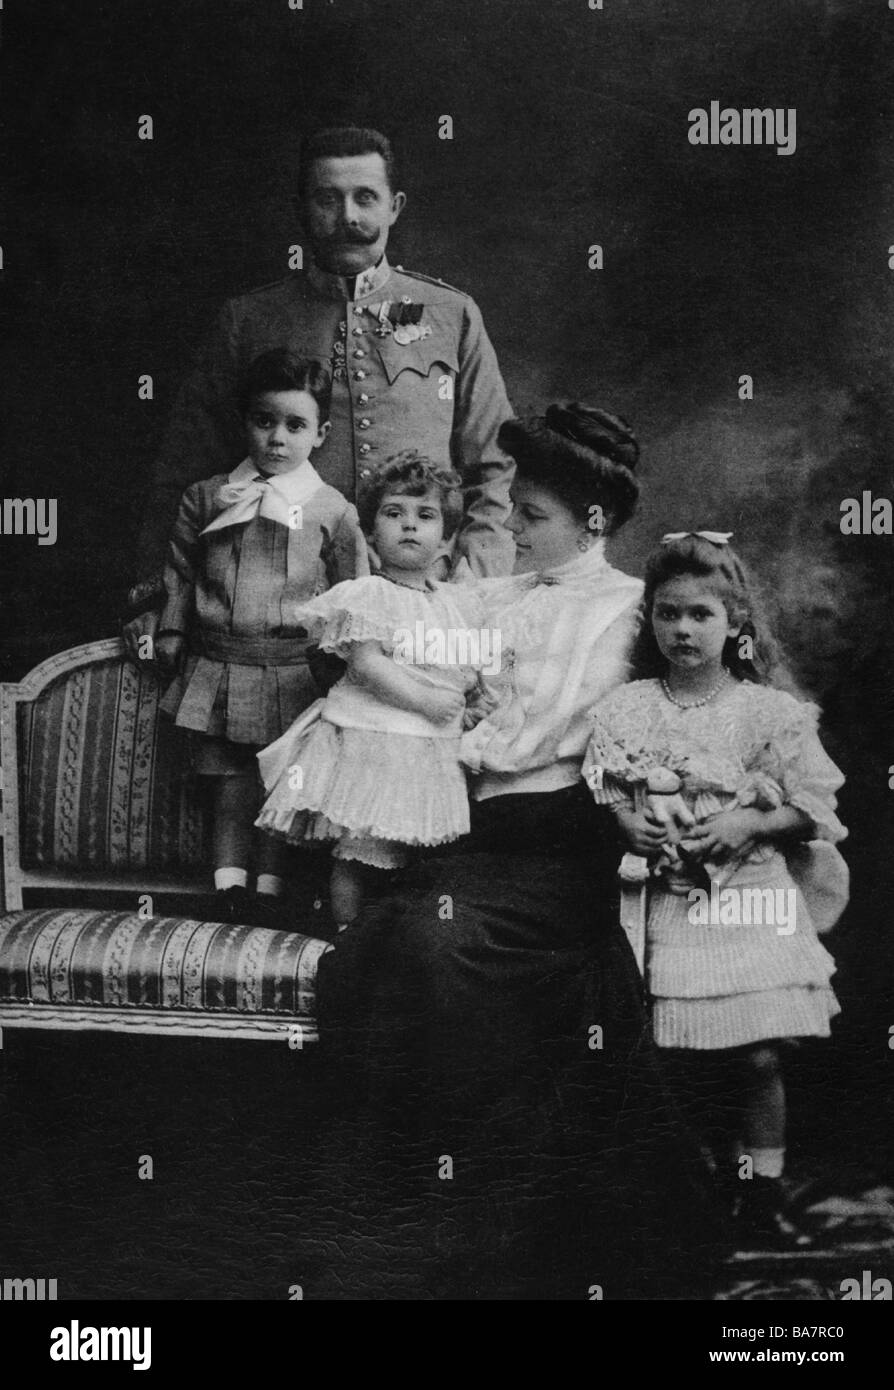 Francis Ferdinand, 18.12.1863 - 28.6.1914, Archduke, heir apparent of Austria-Hungary 30.1.1889  - 28.6.1914, half length, with family, photo postcard, circa 1910, Stock Photo